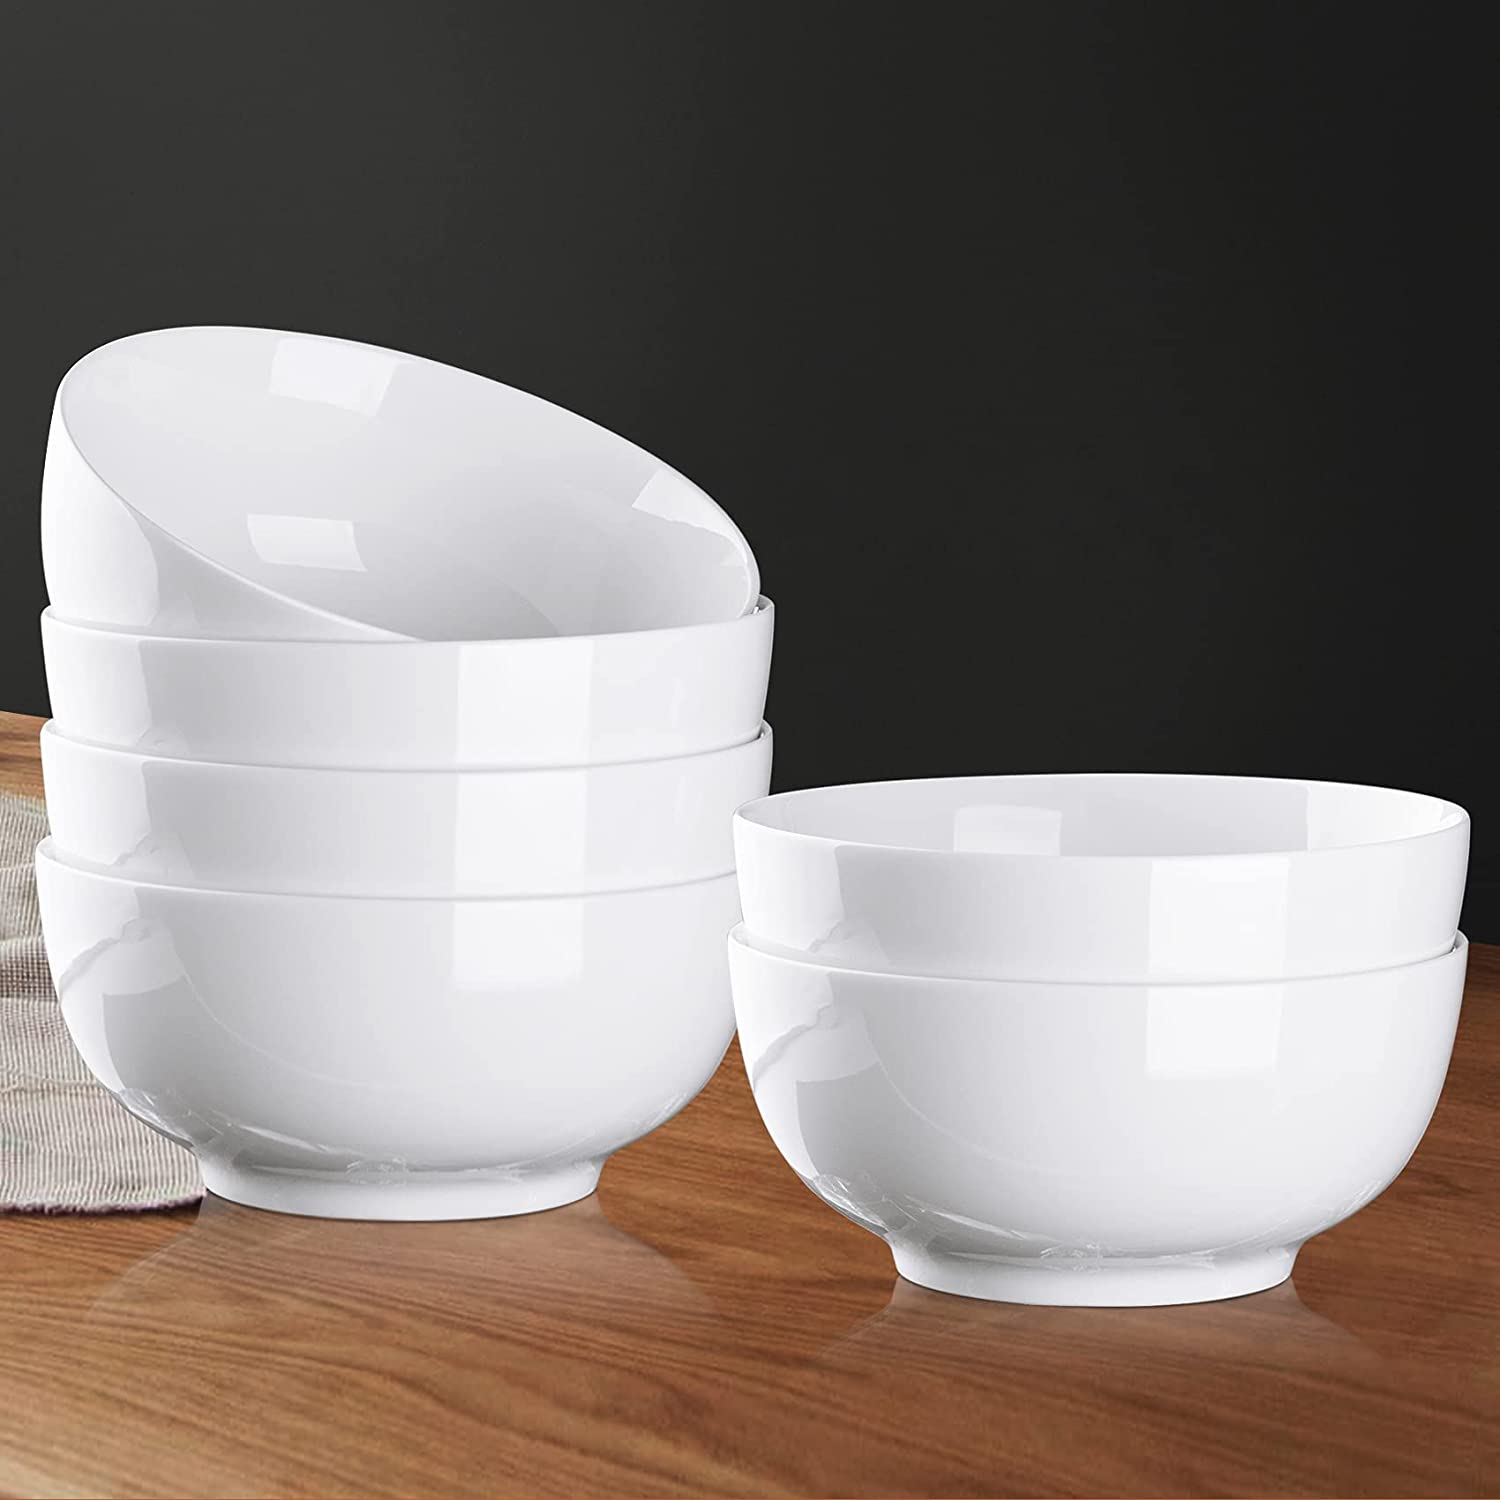 Cibeat Premium Porcelain Bowls Set